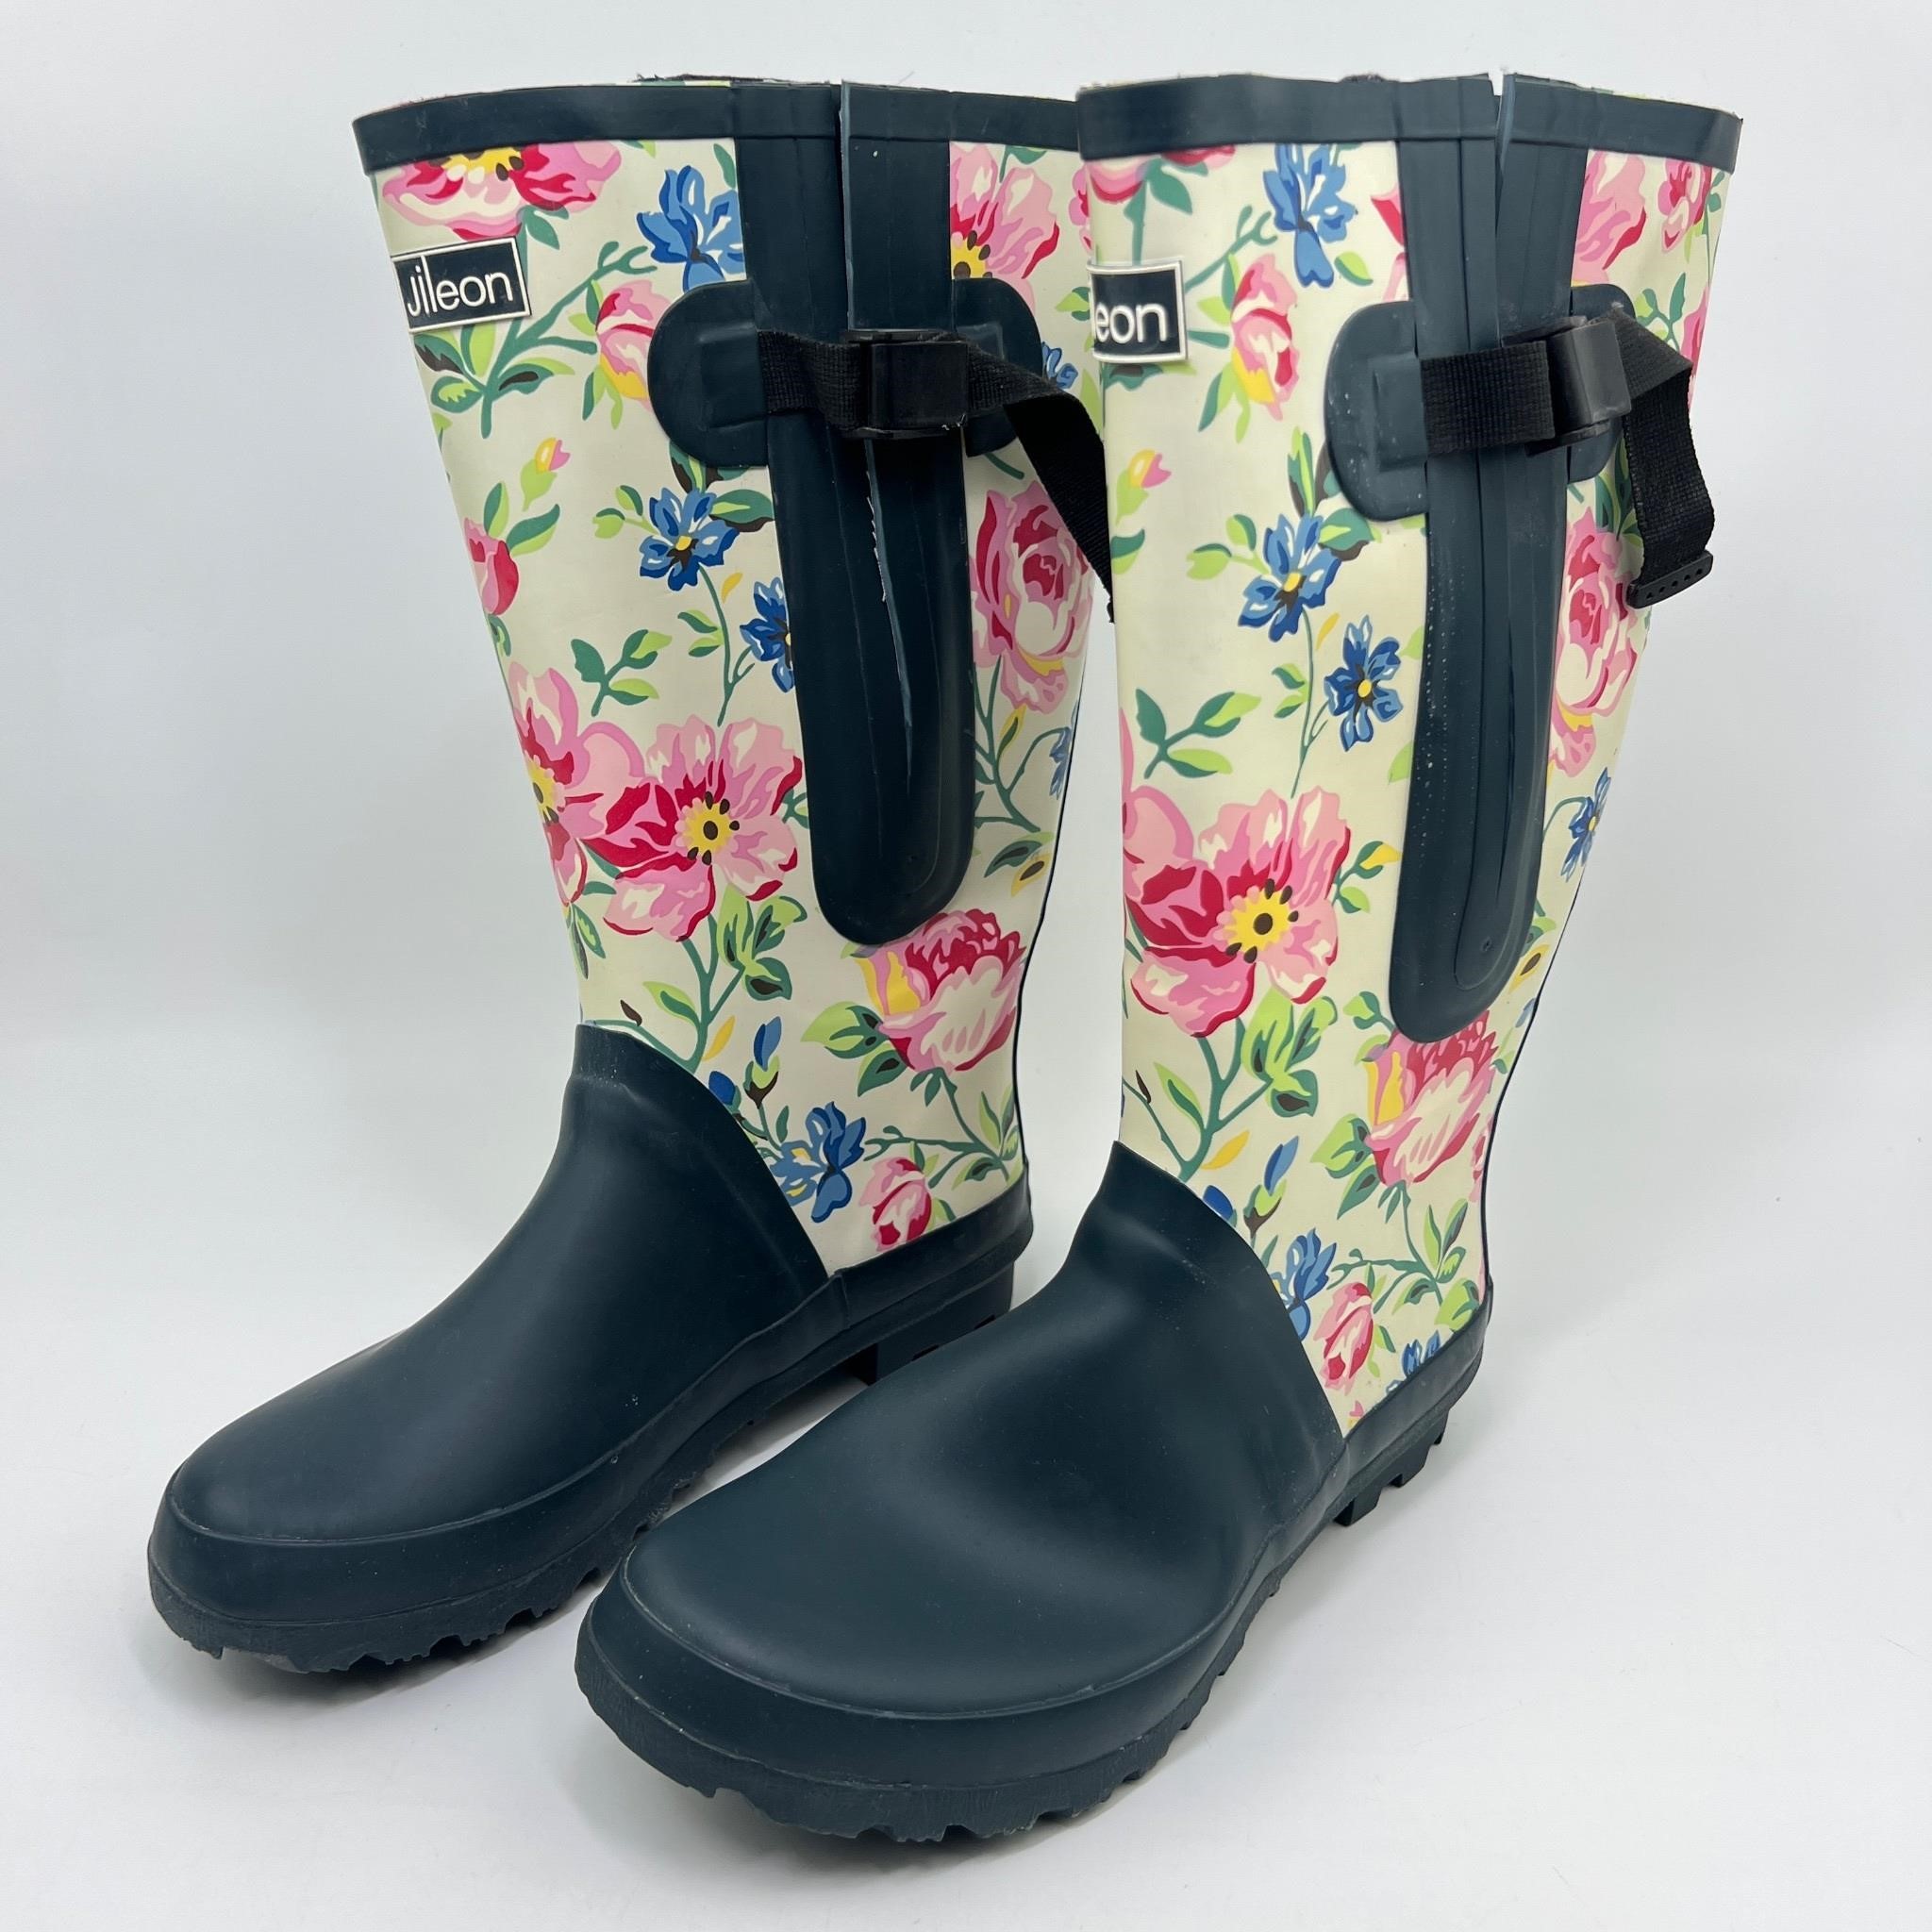 New - Jileon Flower Rain Boots - Women's Size 9